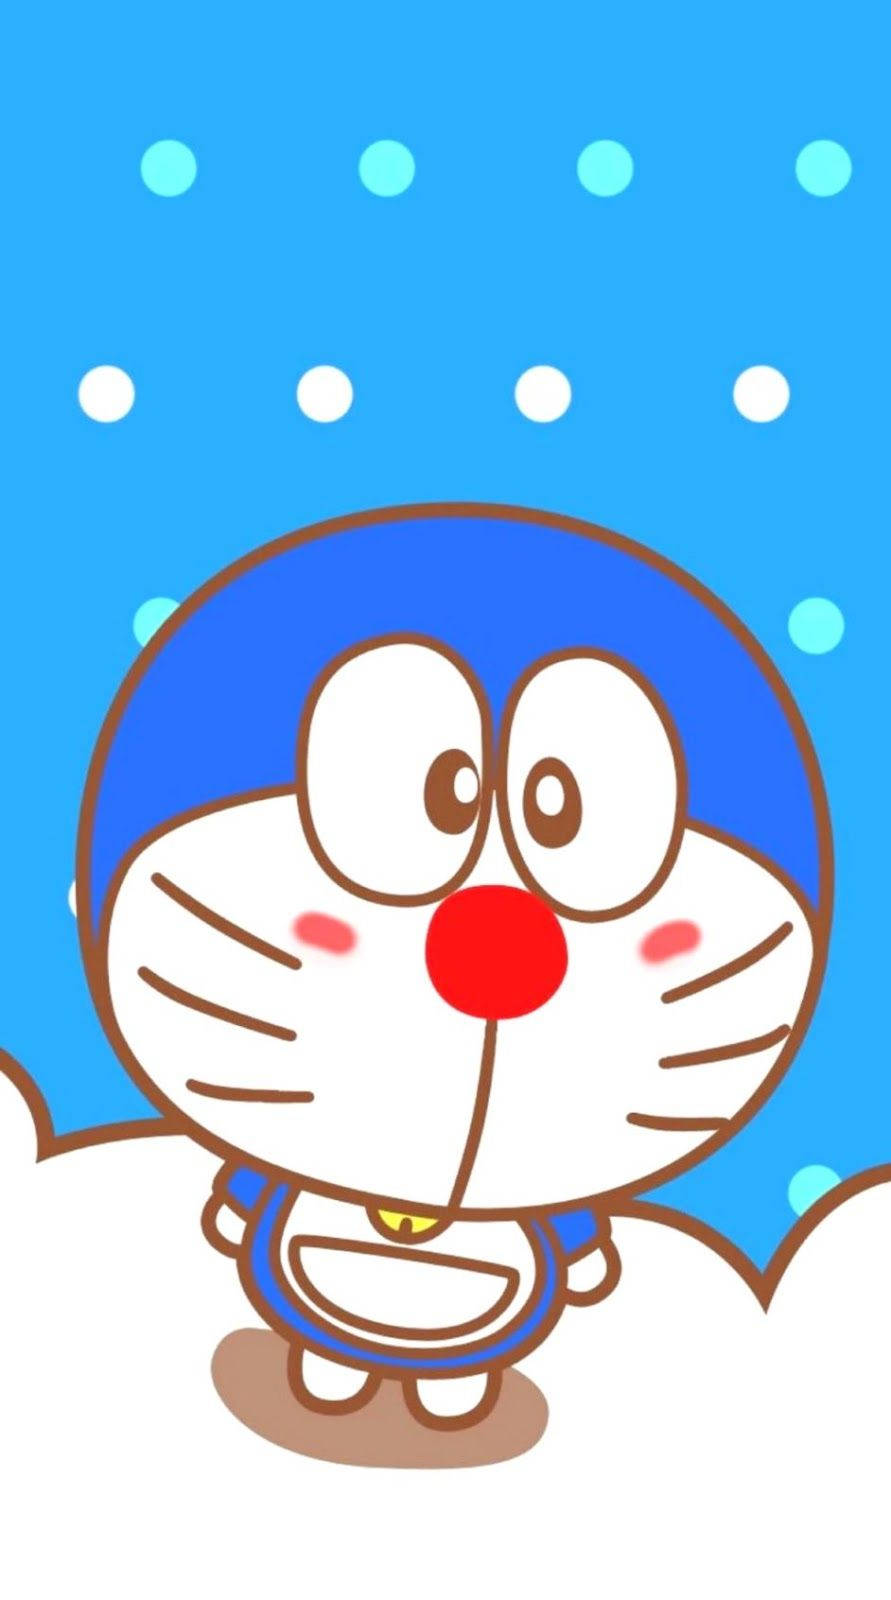 Chibi Doraemon iPhone Art Wallpaper